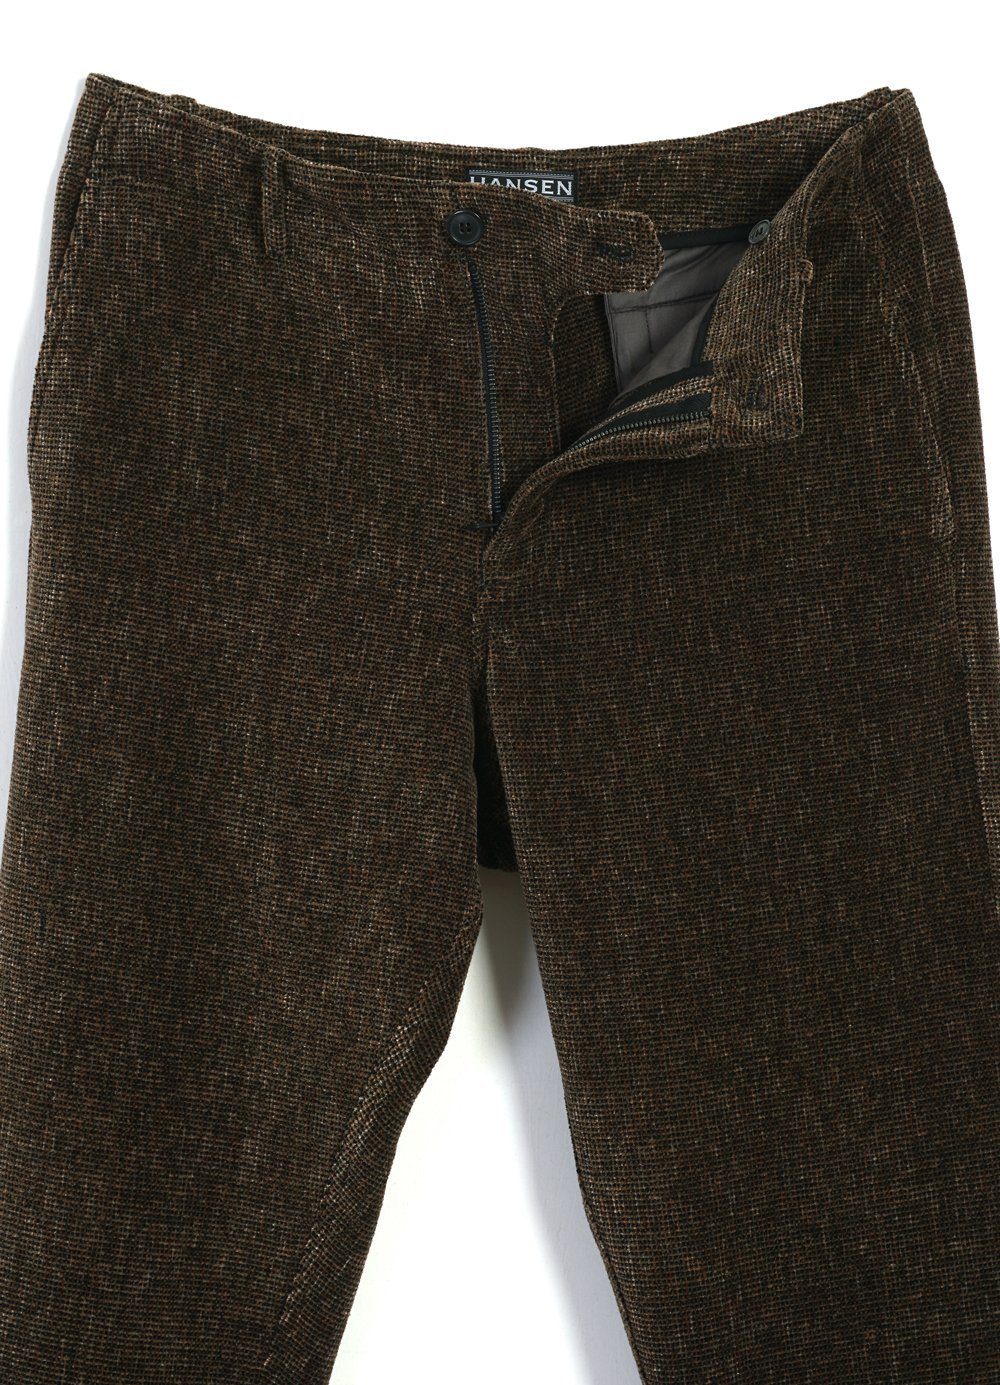 HANSEN GARMENTS - TRYGVE | Wide Cut Cropped Trousers | Amadeus - HANSEN Garments